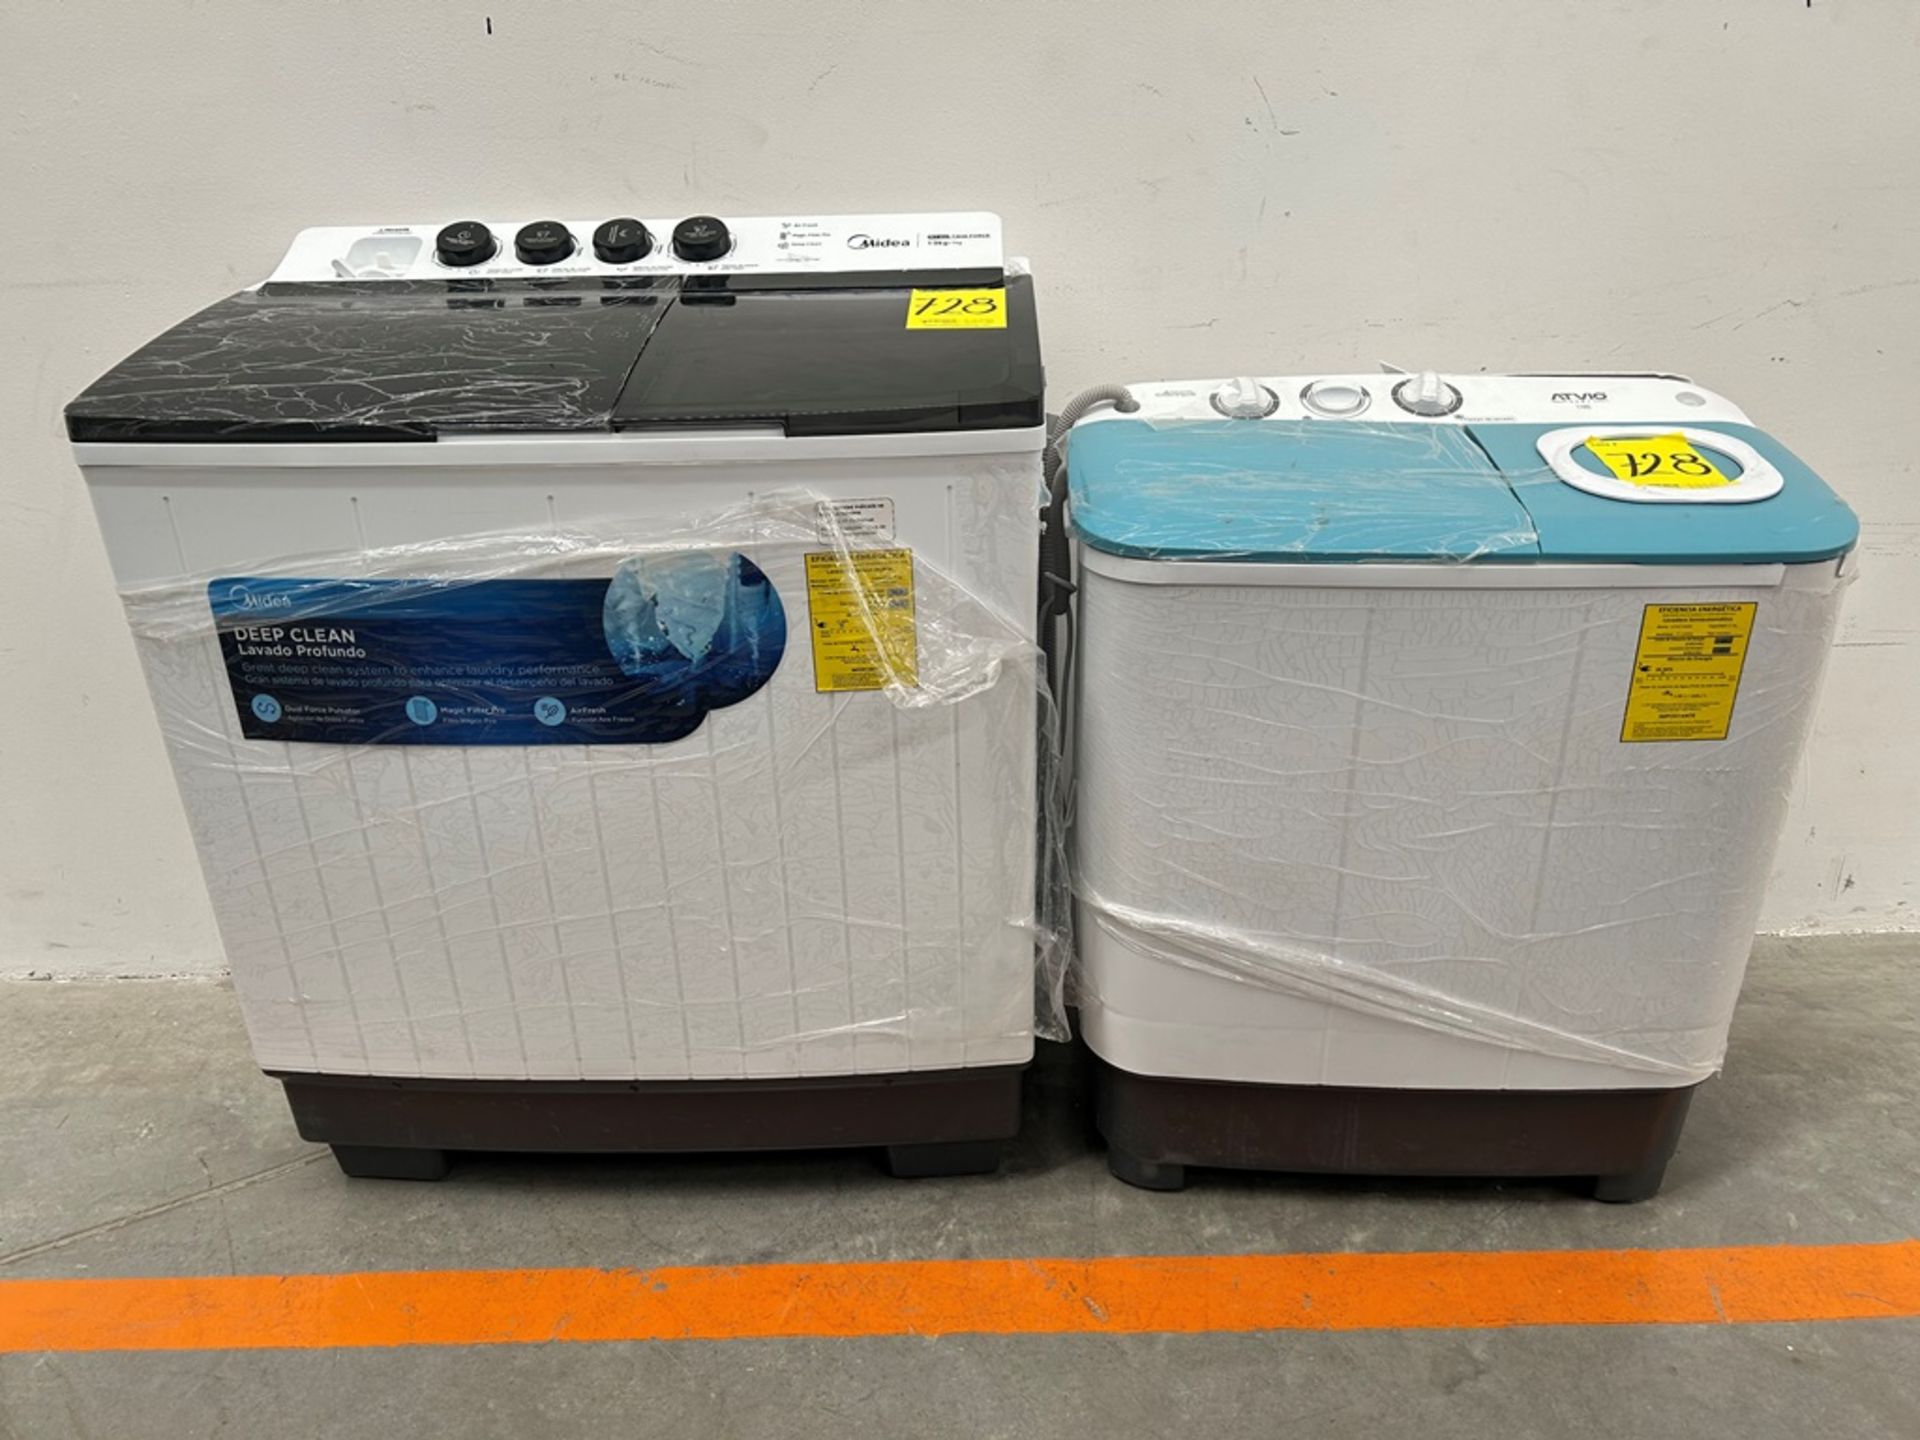 Lote de 2 lavadoras contiene: 1 Lavadora de 19 KG, Marca MIDEA, Modelo MT100W190WMX, Serie 500964,